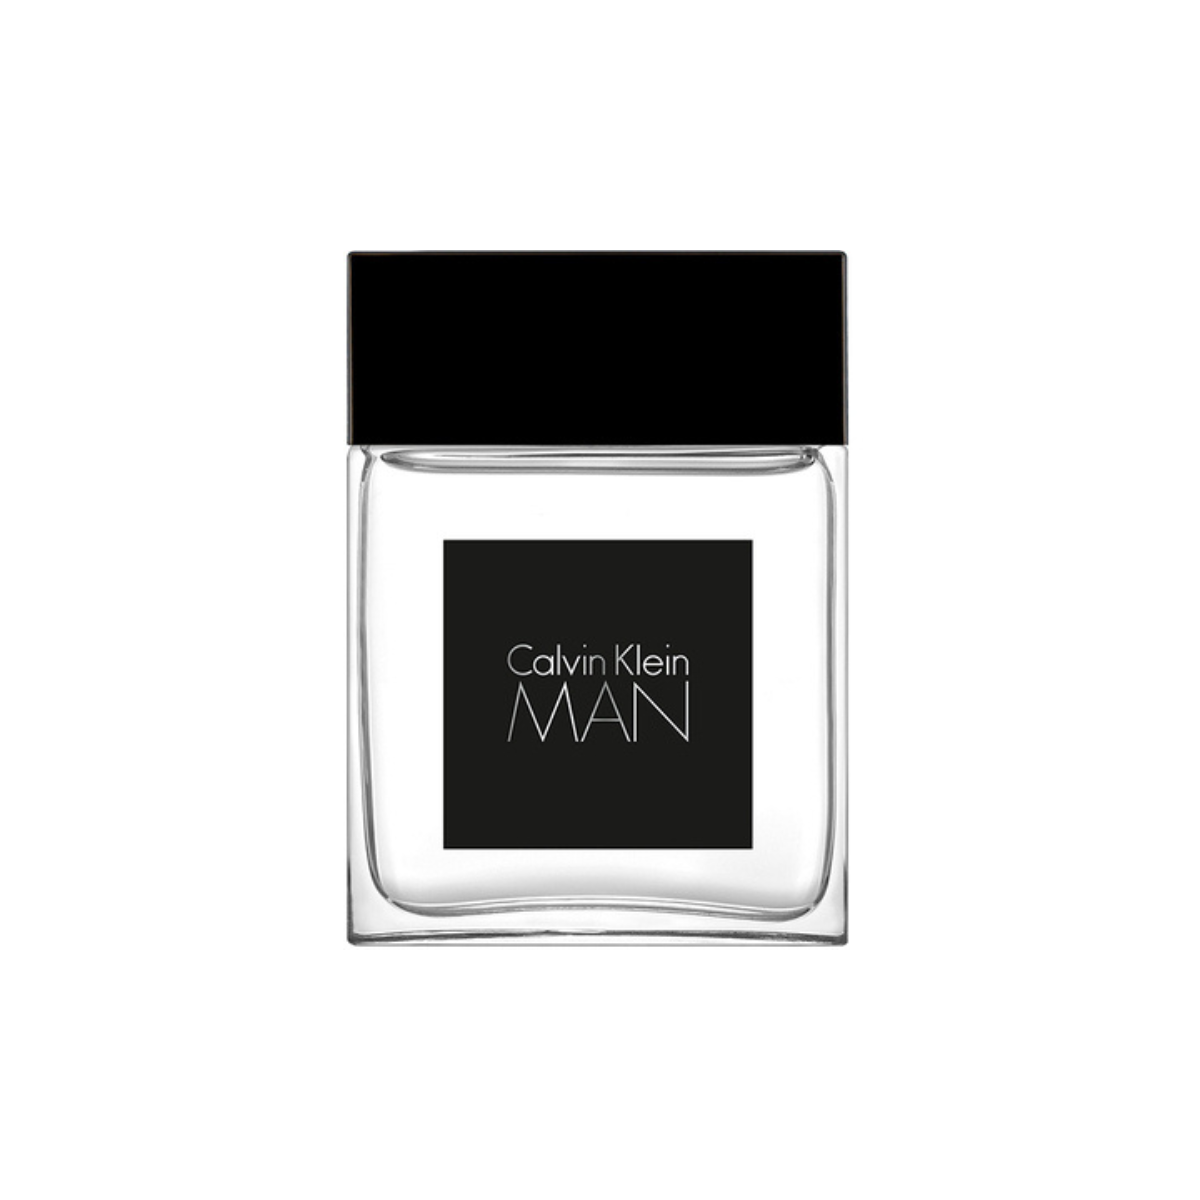 Calvin Klein Man Eau de Toilette 100ml SAVE 50%